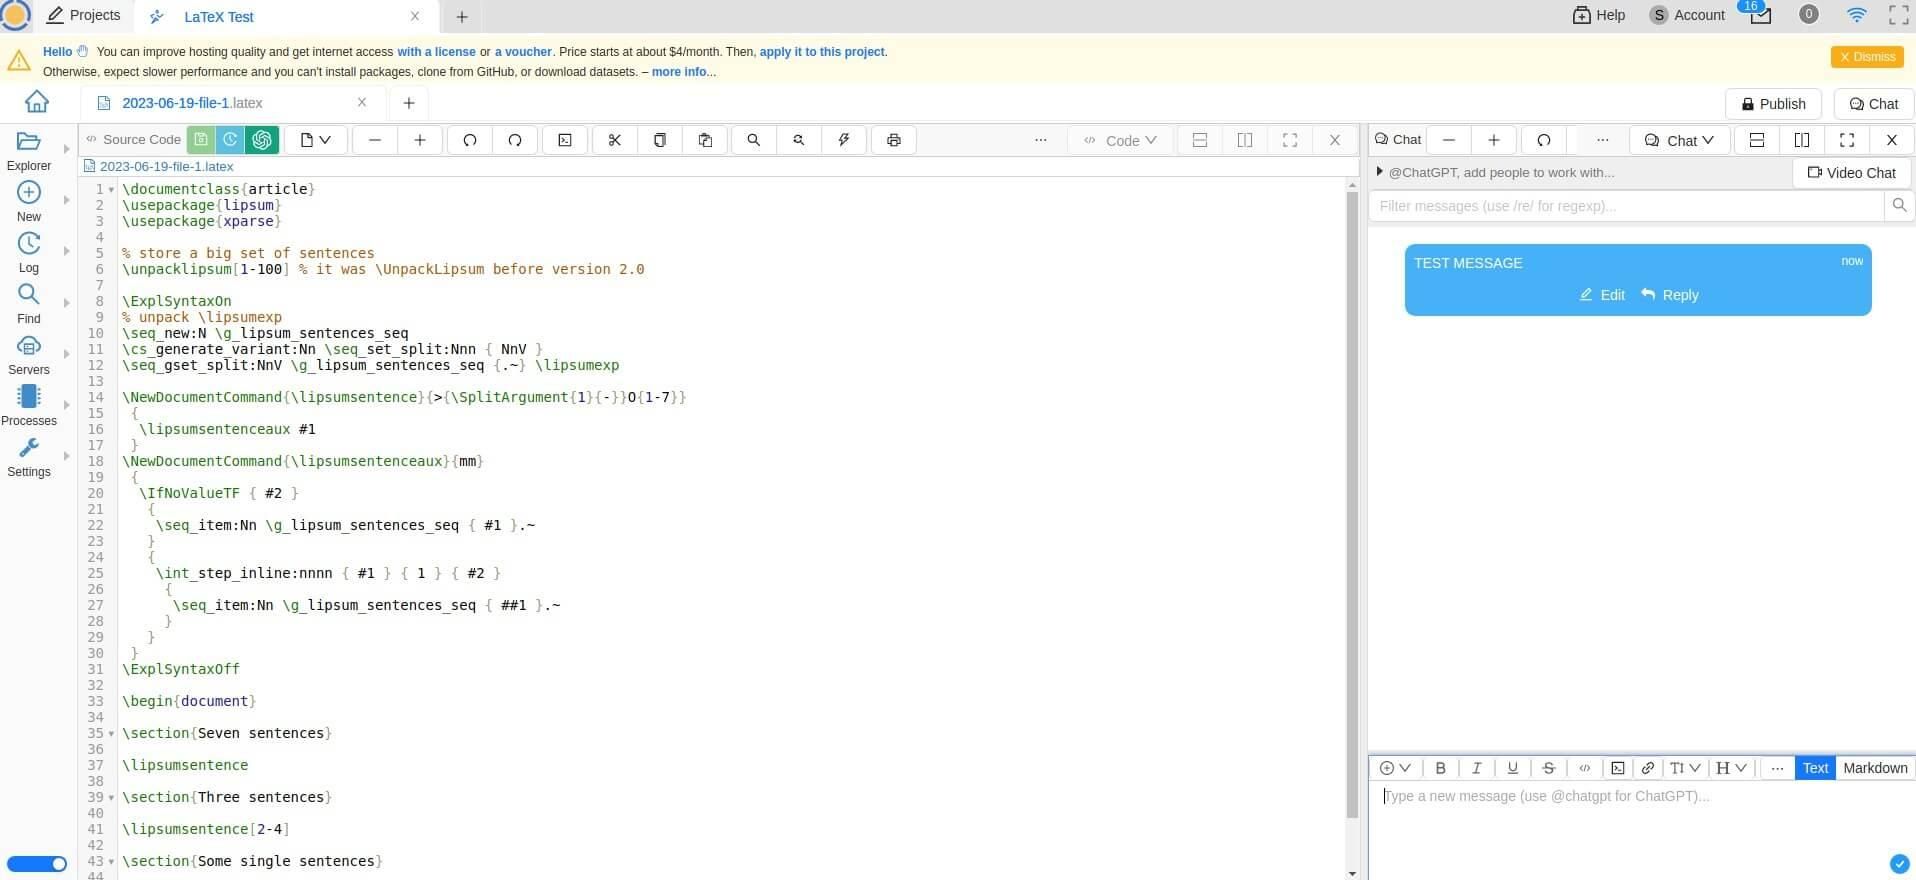 a screenshot of cocalc's online latex editor